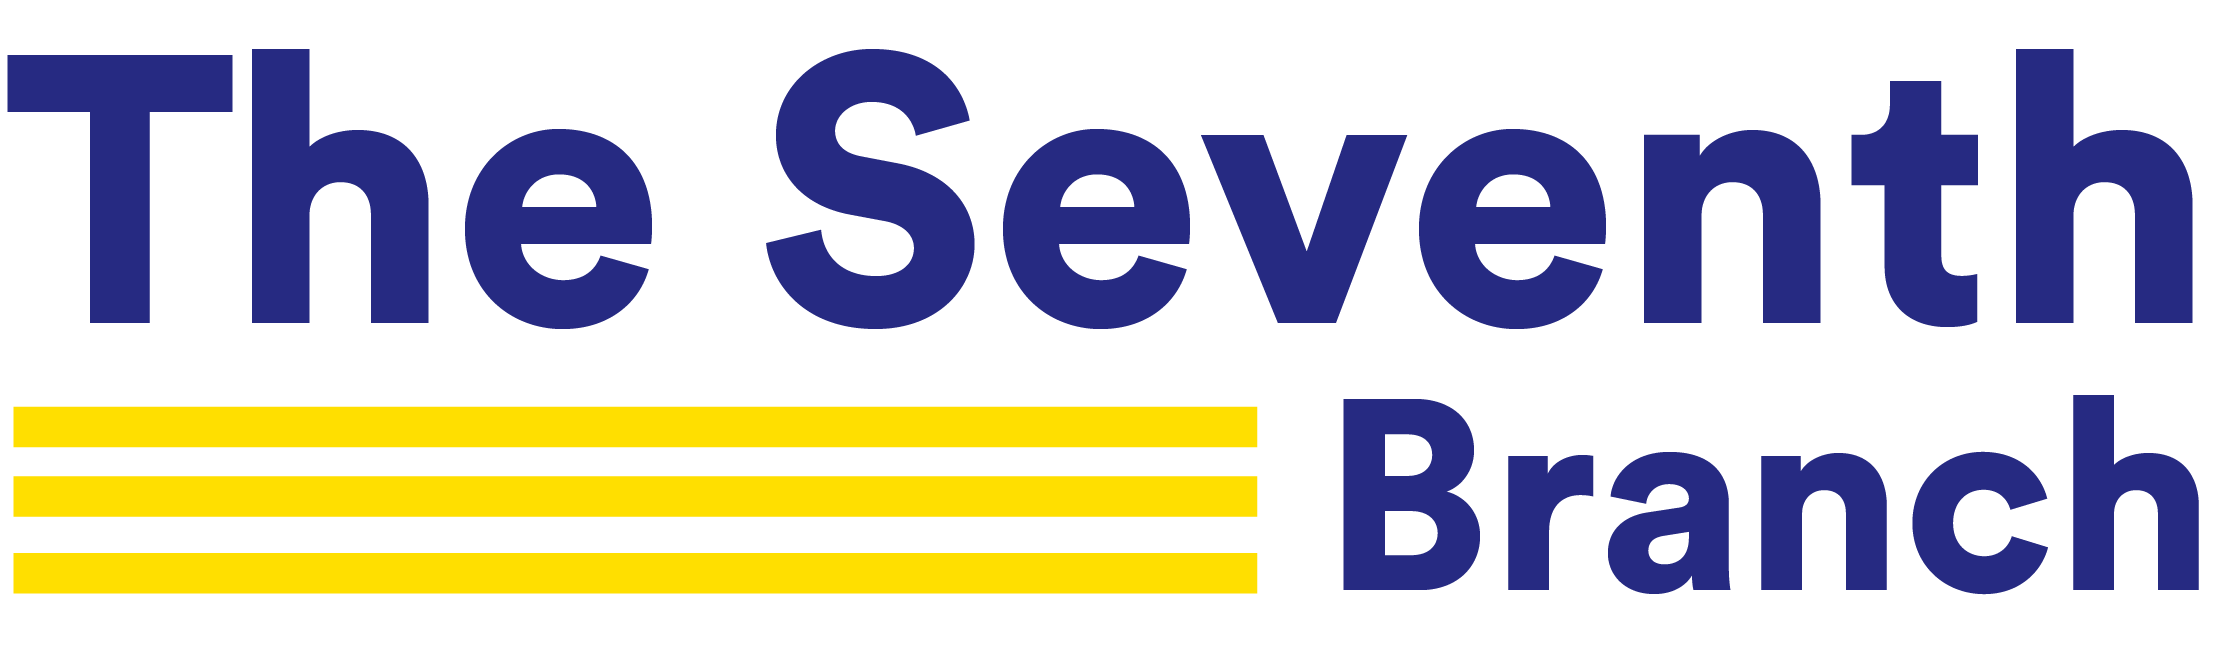 The Seventh Branch Guild ERG logo